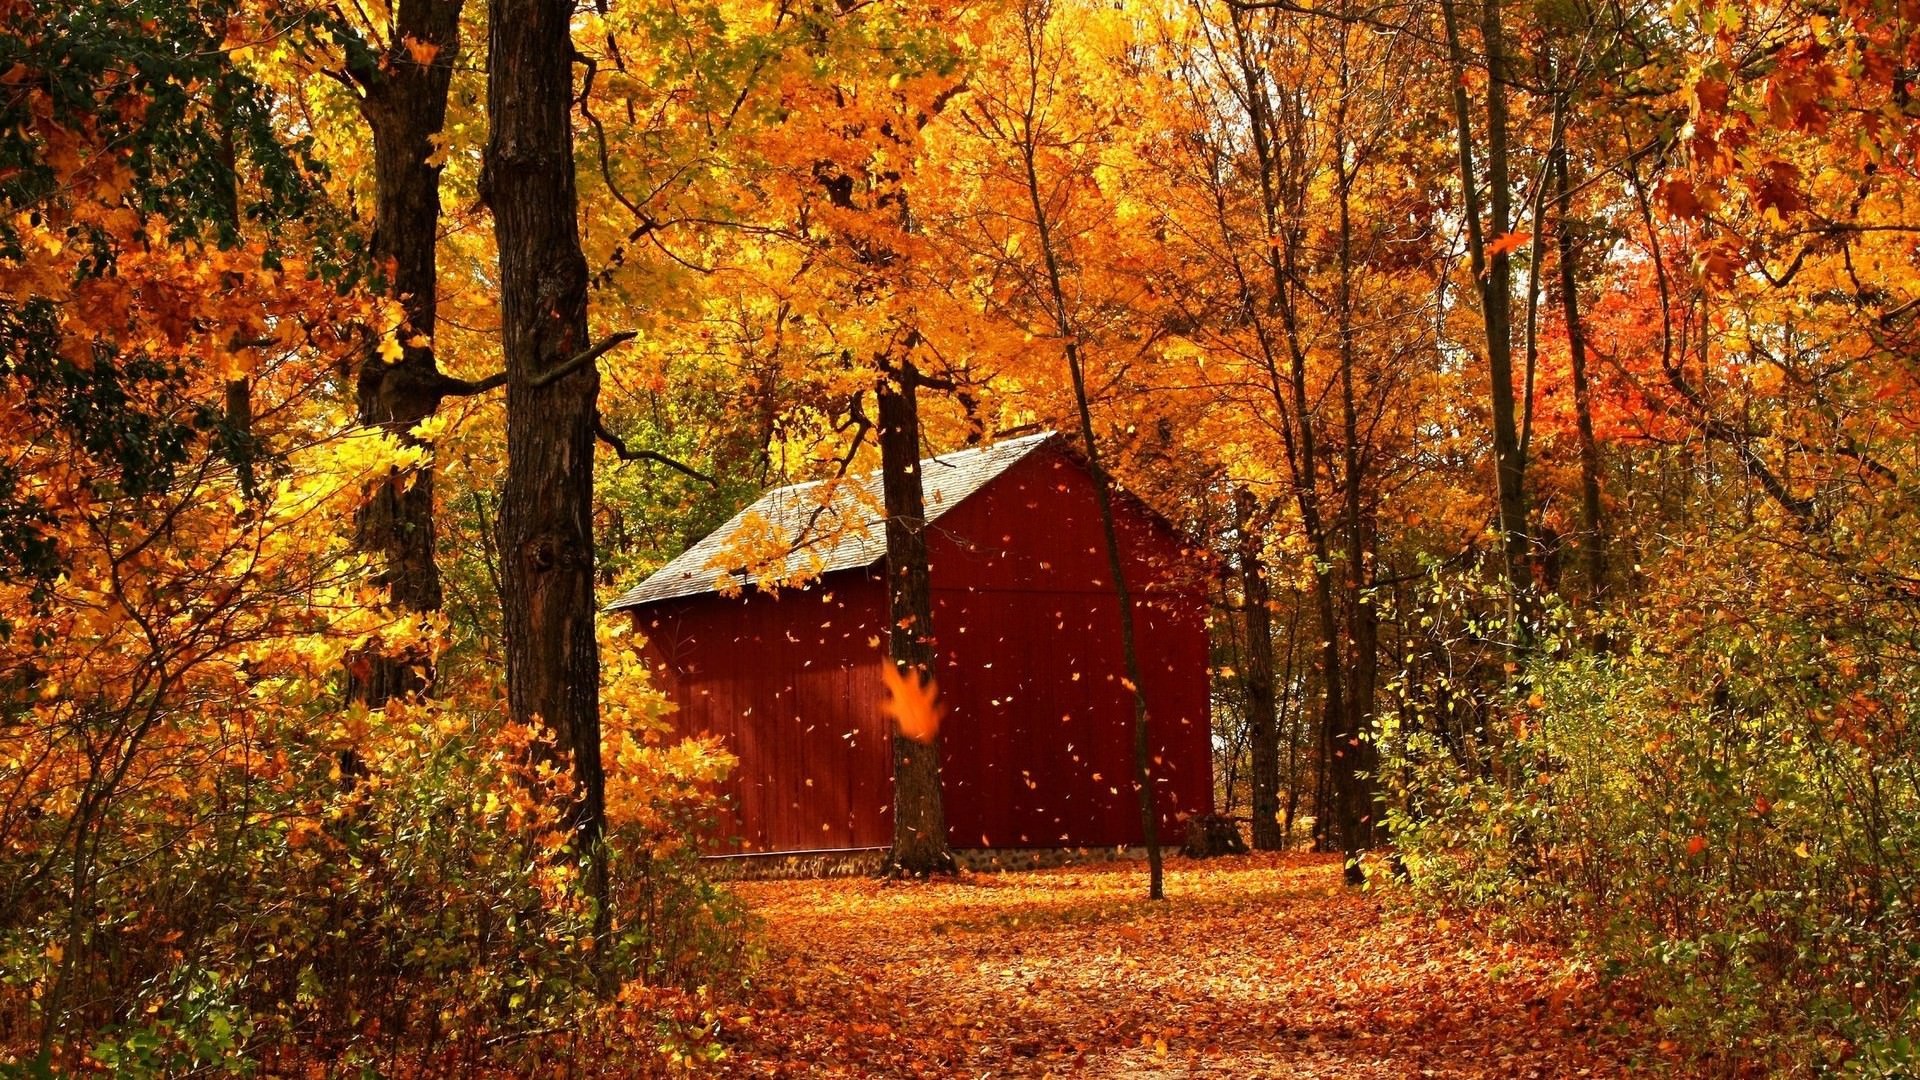 1920x1080 Autumn Breeze Background Image. Autumn Breeze Wallpaper